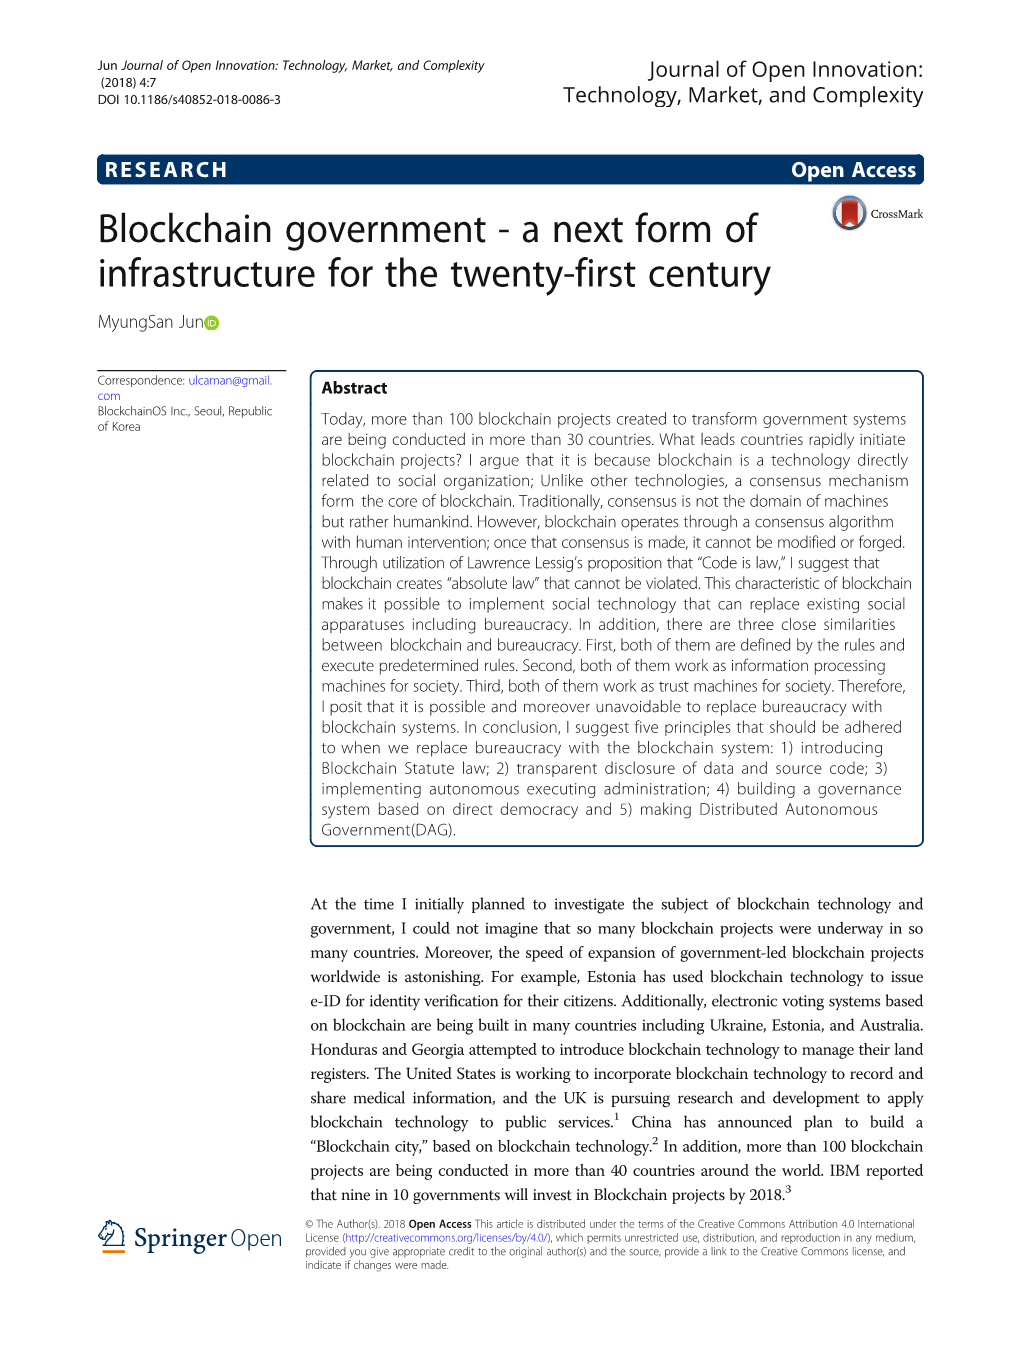 Blockchain Government - a Next Form of Infrastructure for the Twenty-First Century Myungsan Jun